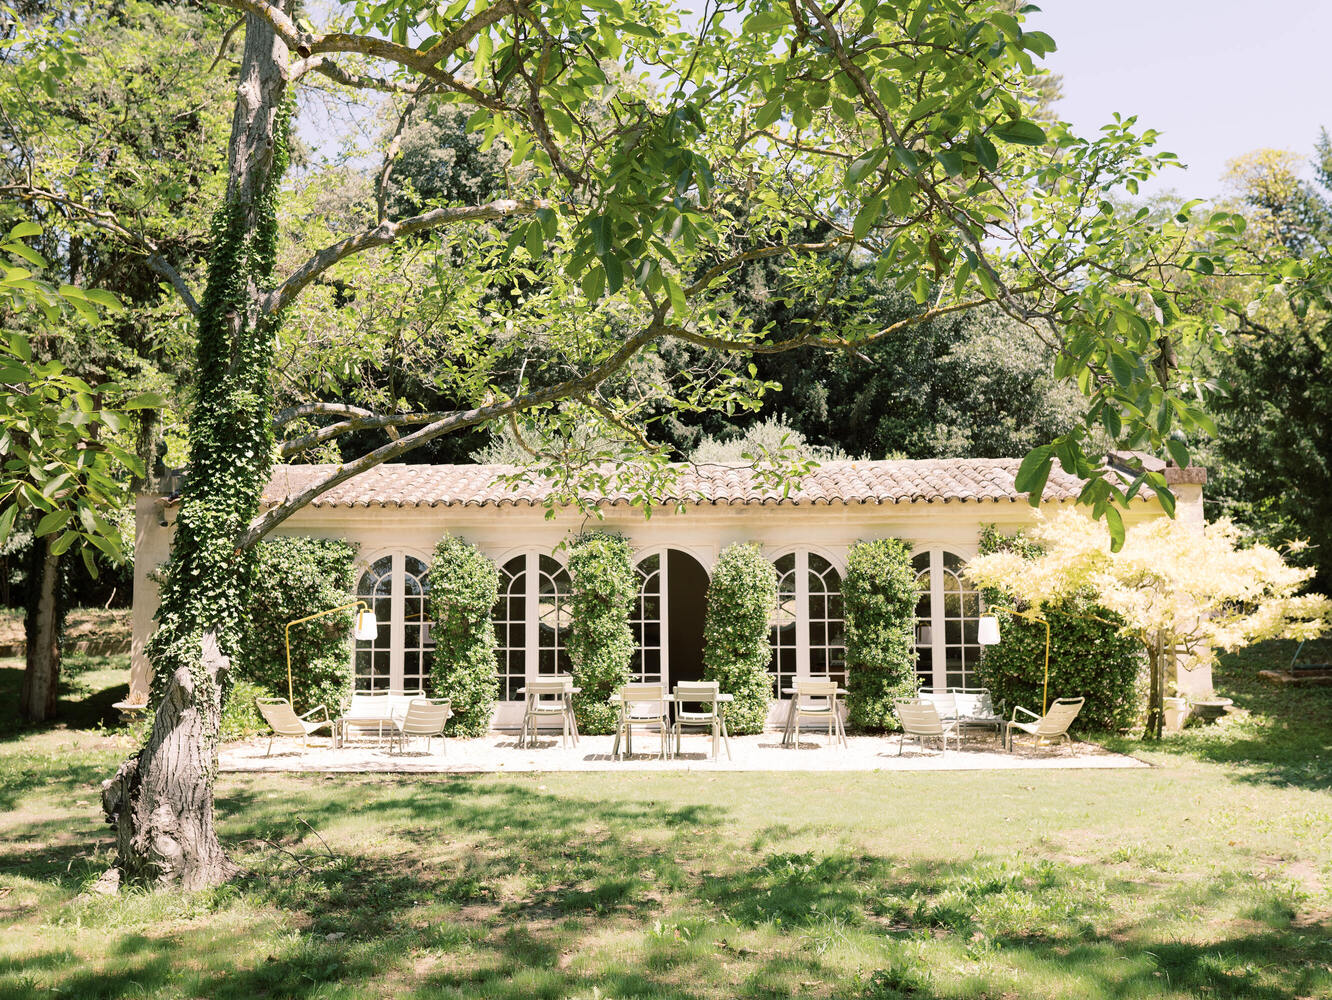 Lemon treen house of luxury chateau in France